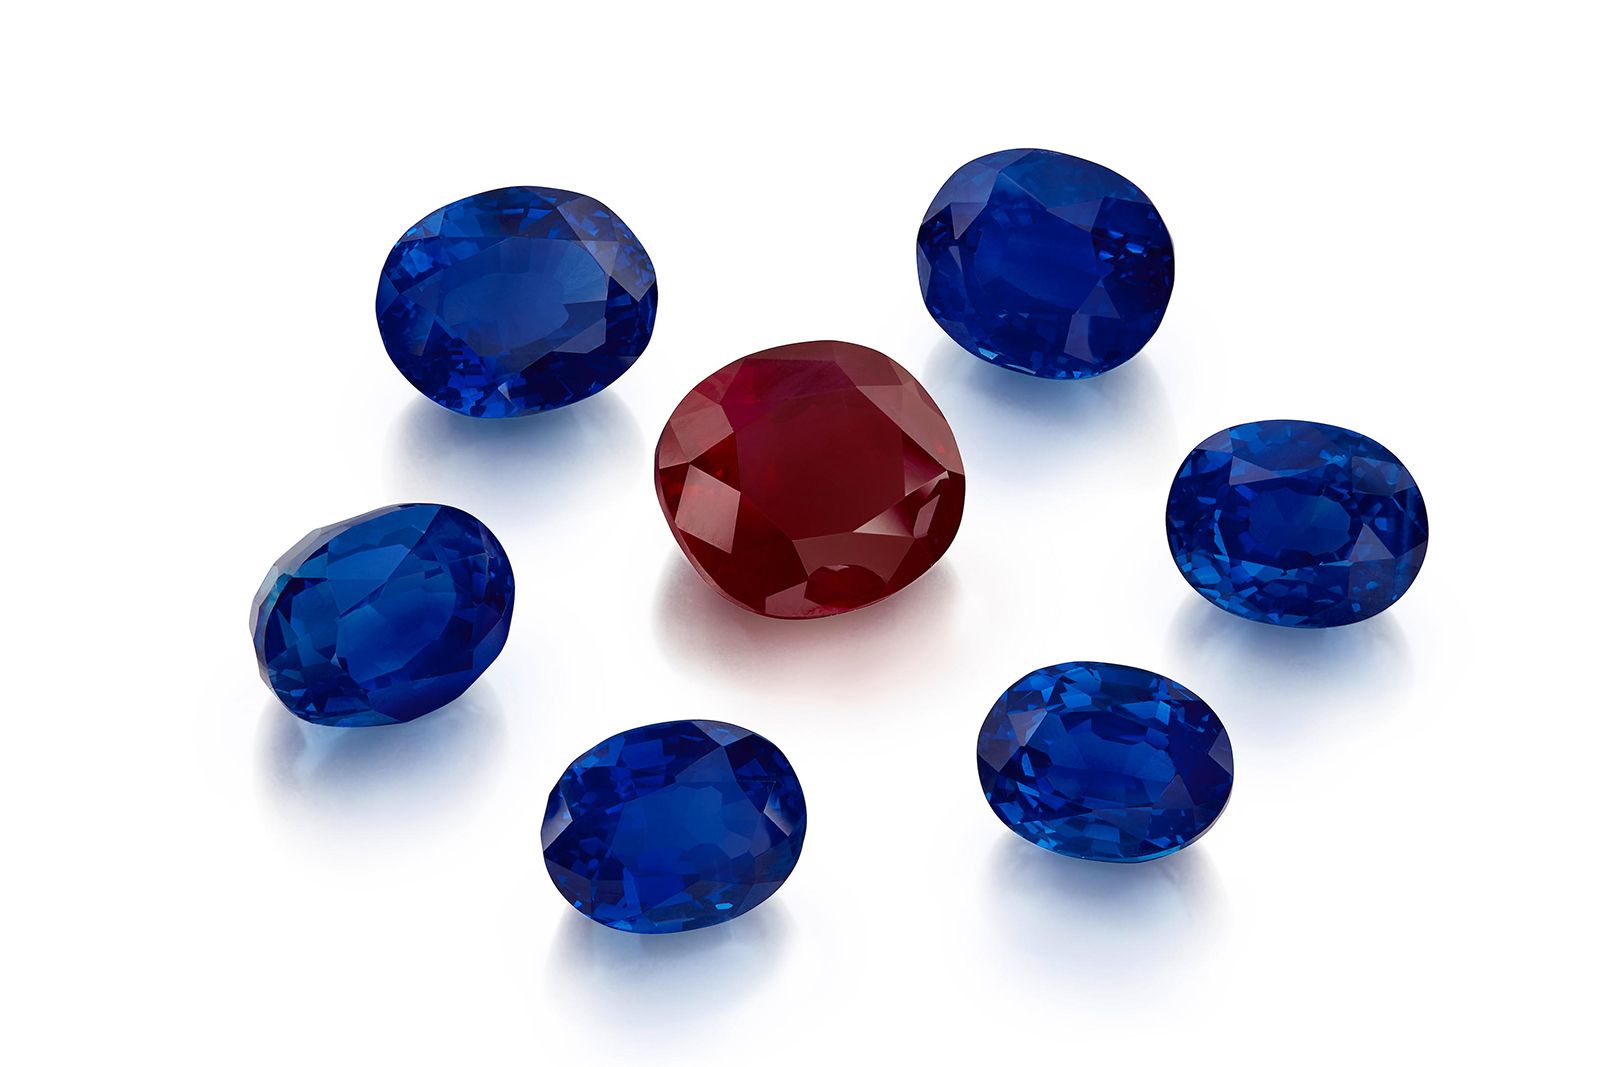 Lot 234 in the Bonhams London Jewels sale comprises six Kashmir sapphires and one Burmese ruby (estimate £390,000 - £450,000) 